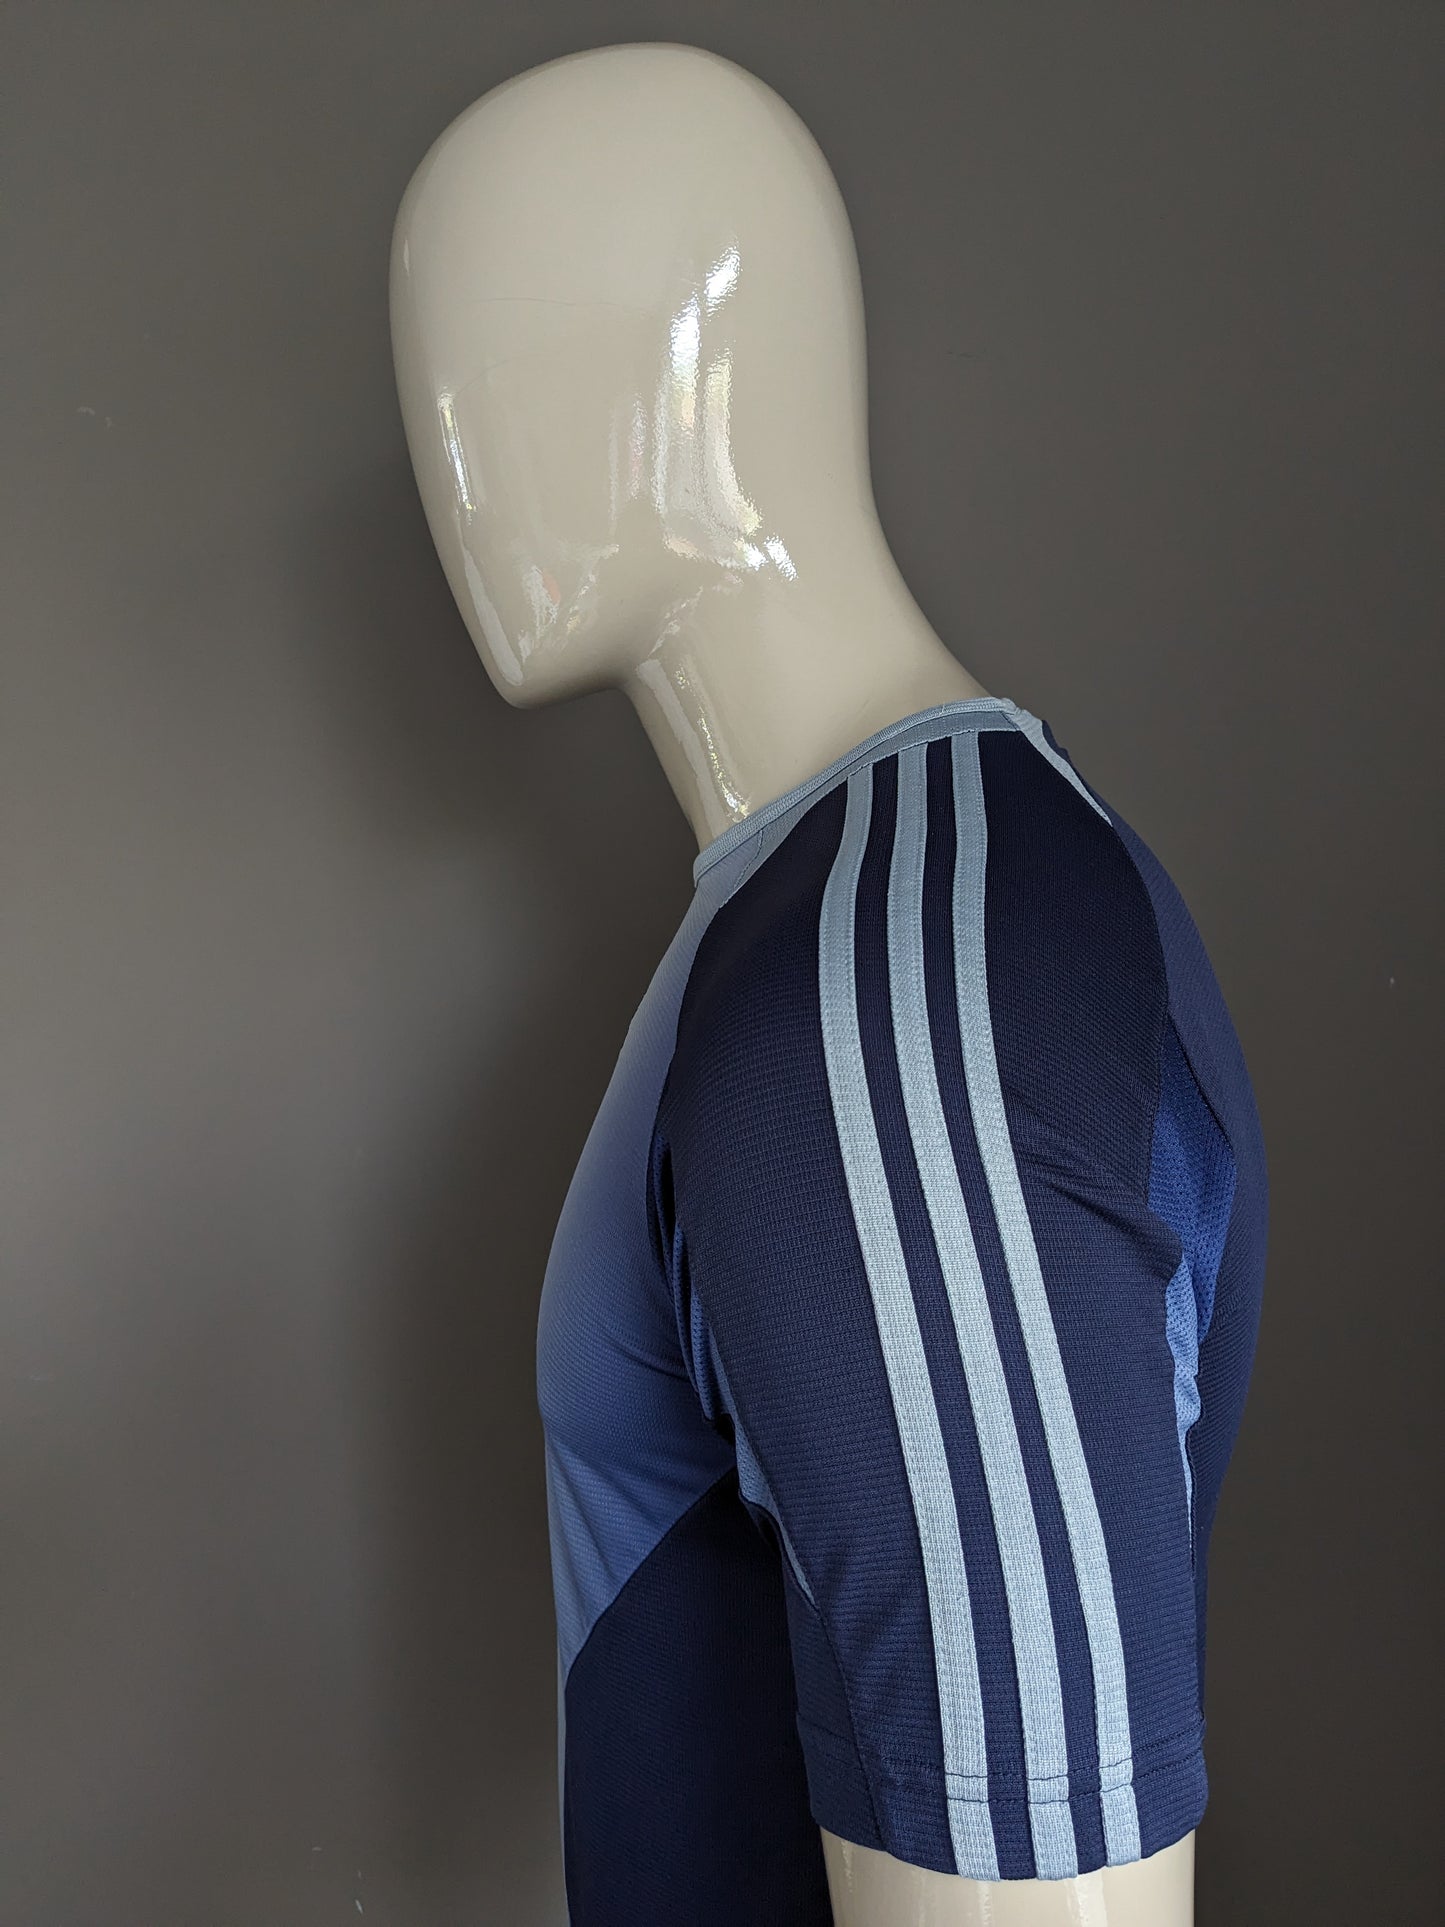 Adidas Sporthemd. Blau gefärbt. Größe S.